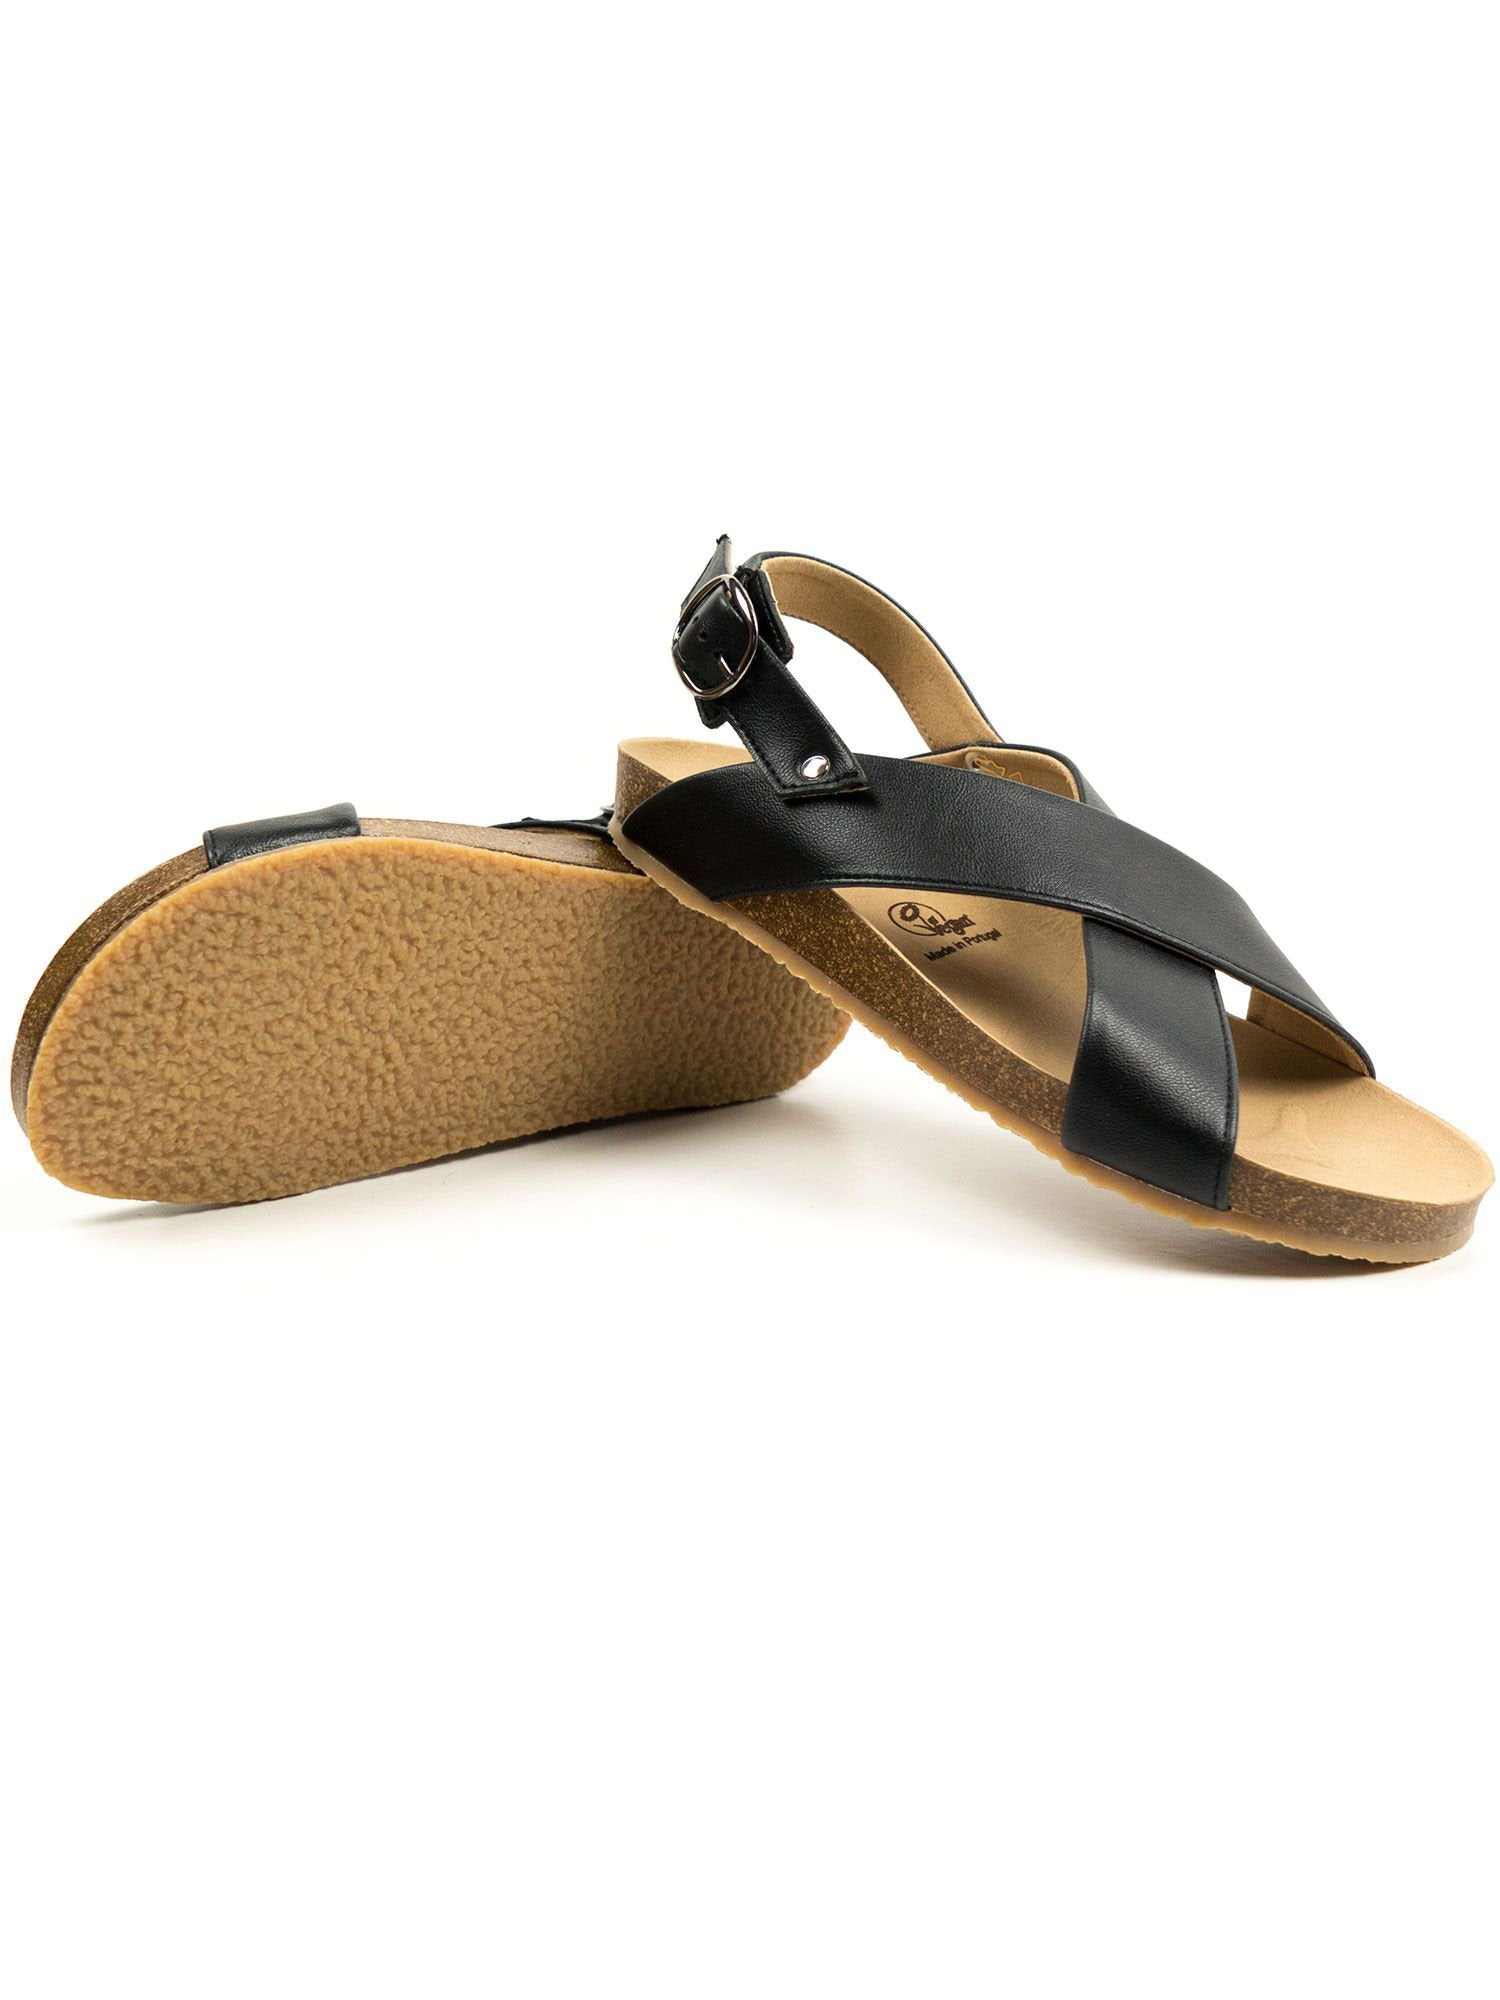 Vegan Women's Huarache Footbed Sandals | Will's Vegan Store